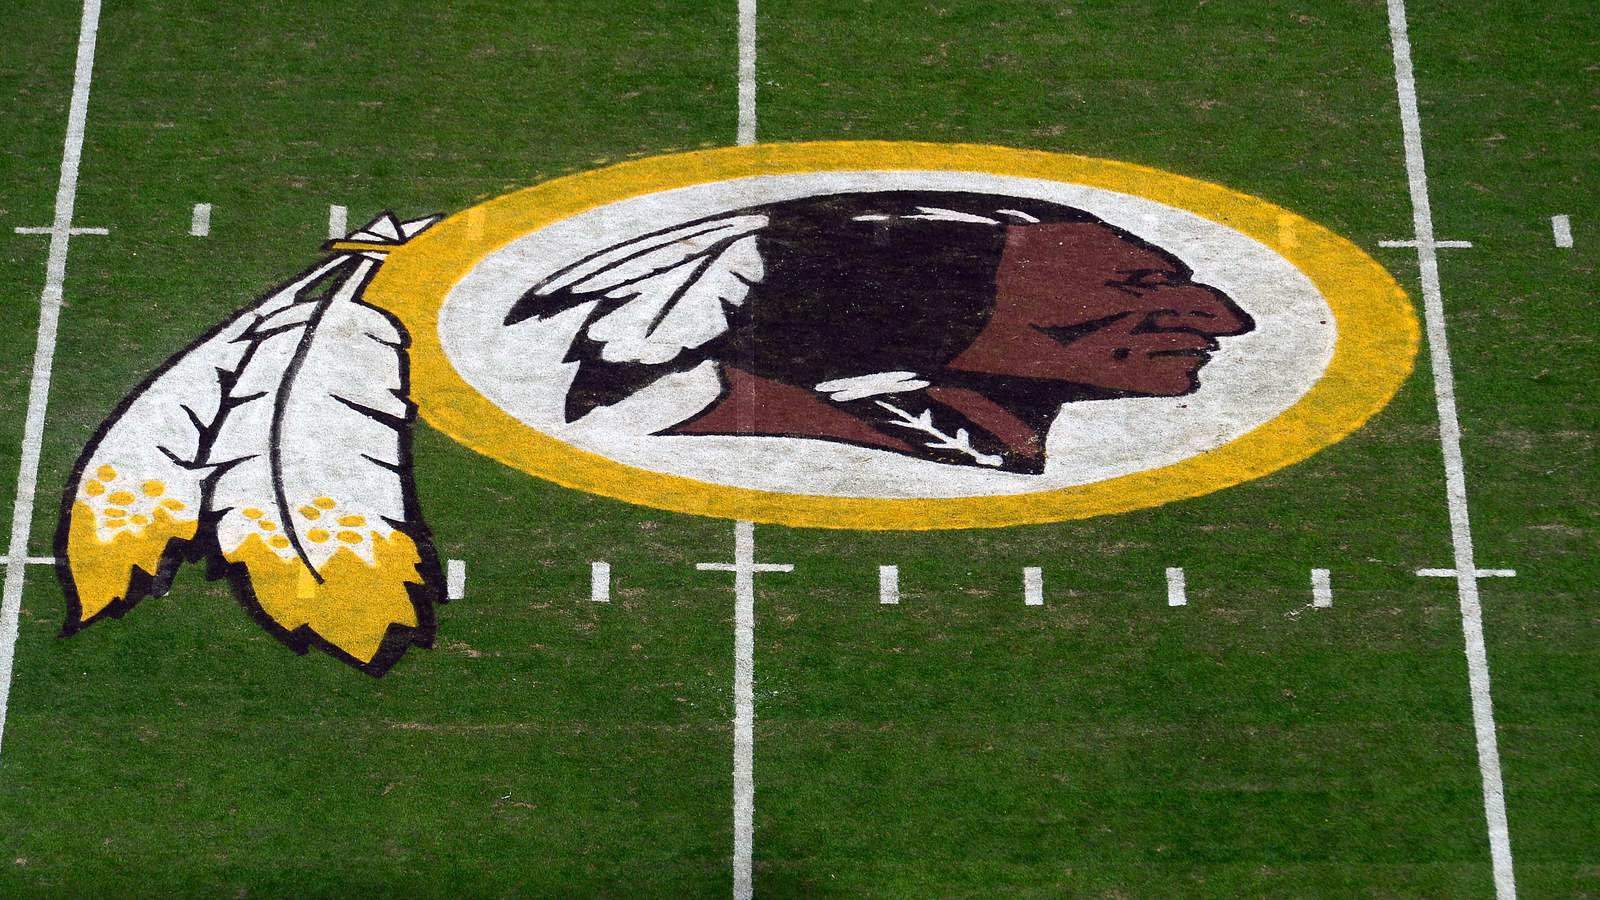 Sponsor FedEx asks Redskins to change their name